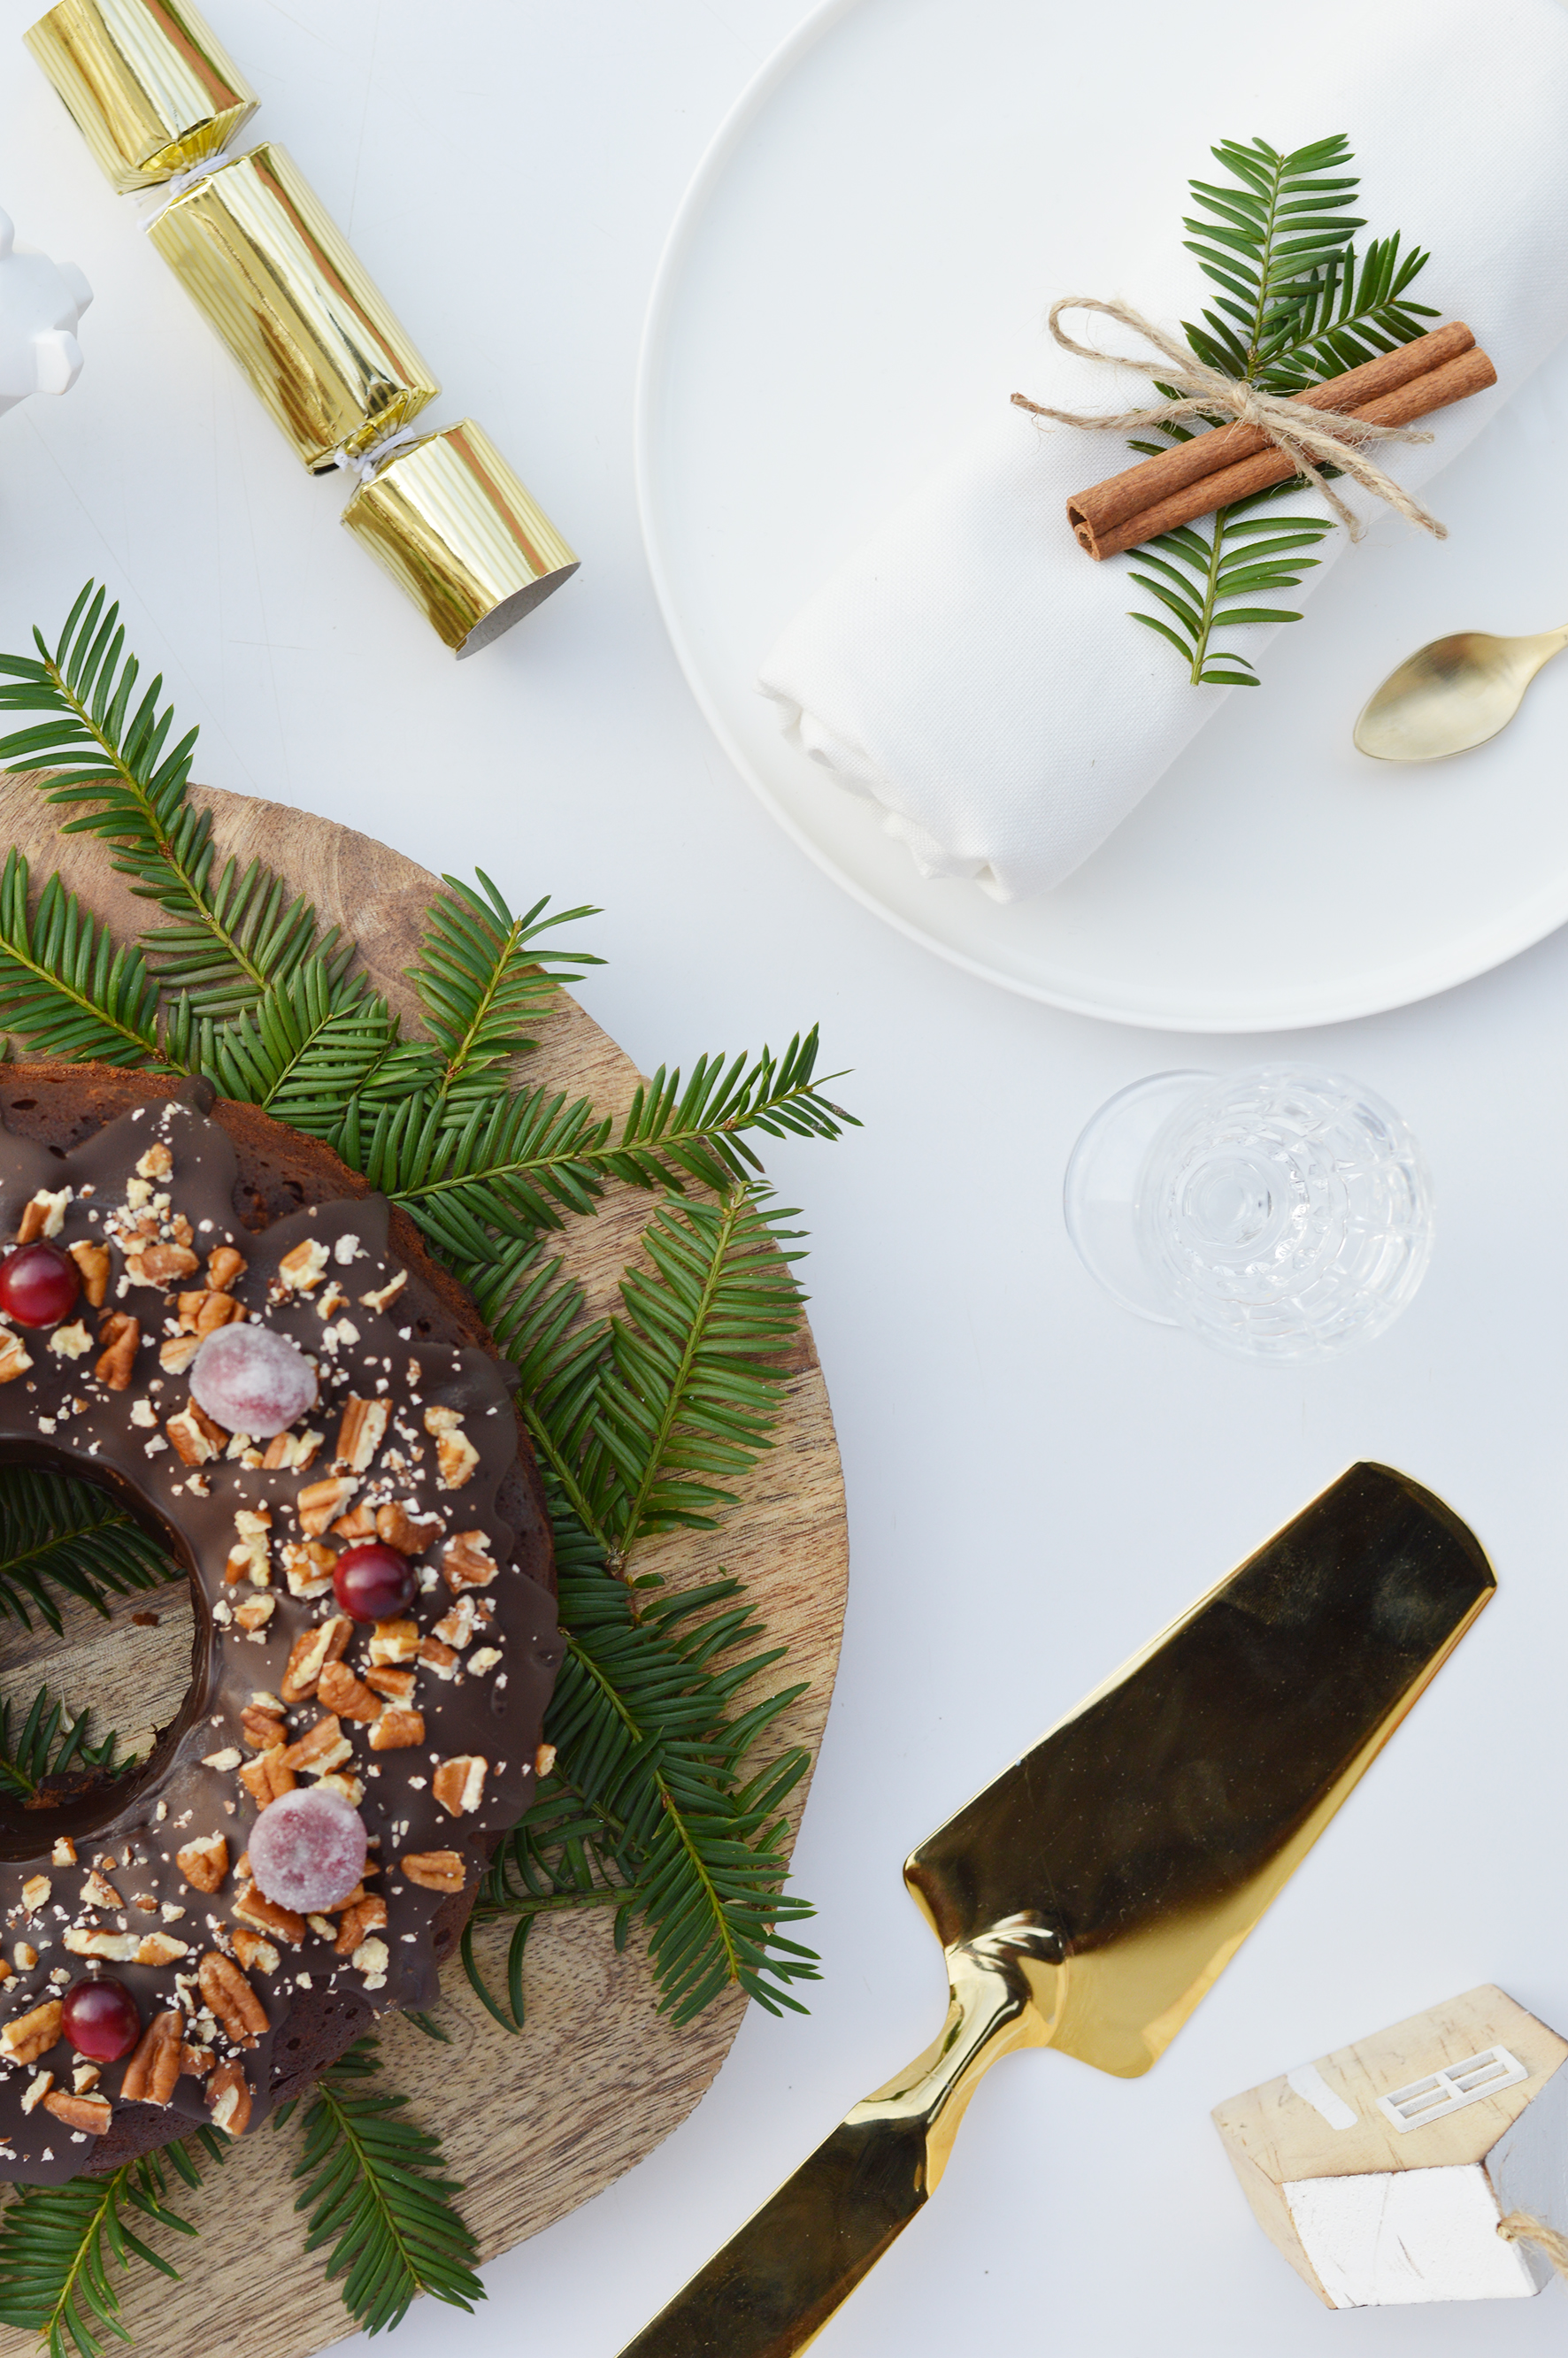 Boîte de Chocolats Couronne de Noël 100g - Maria Chocolate